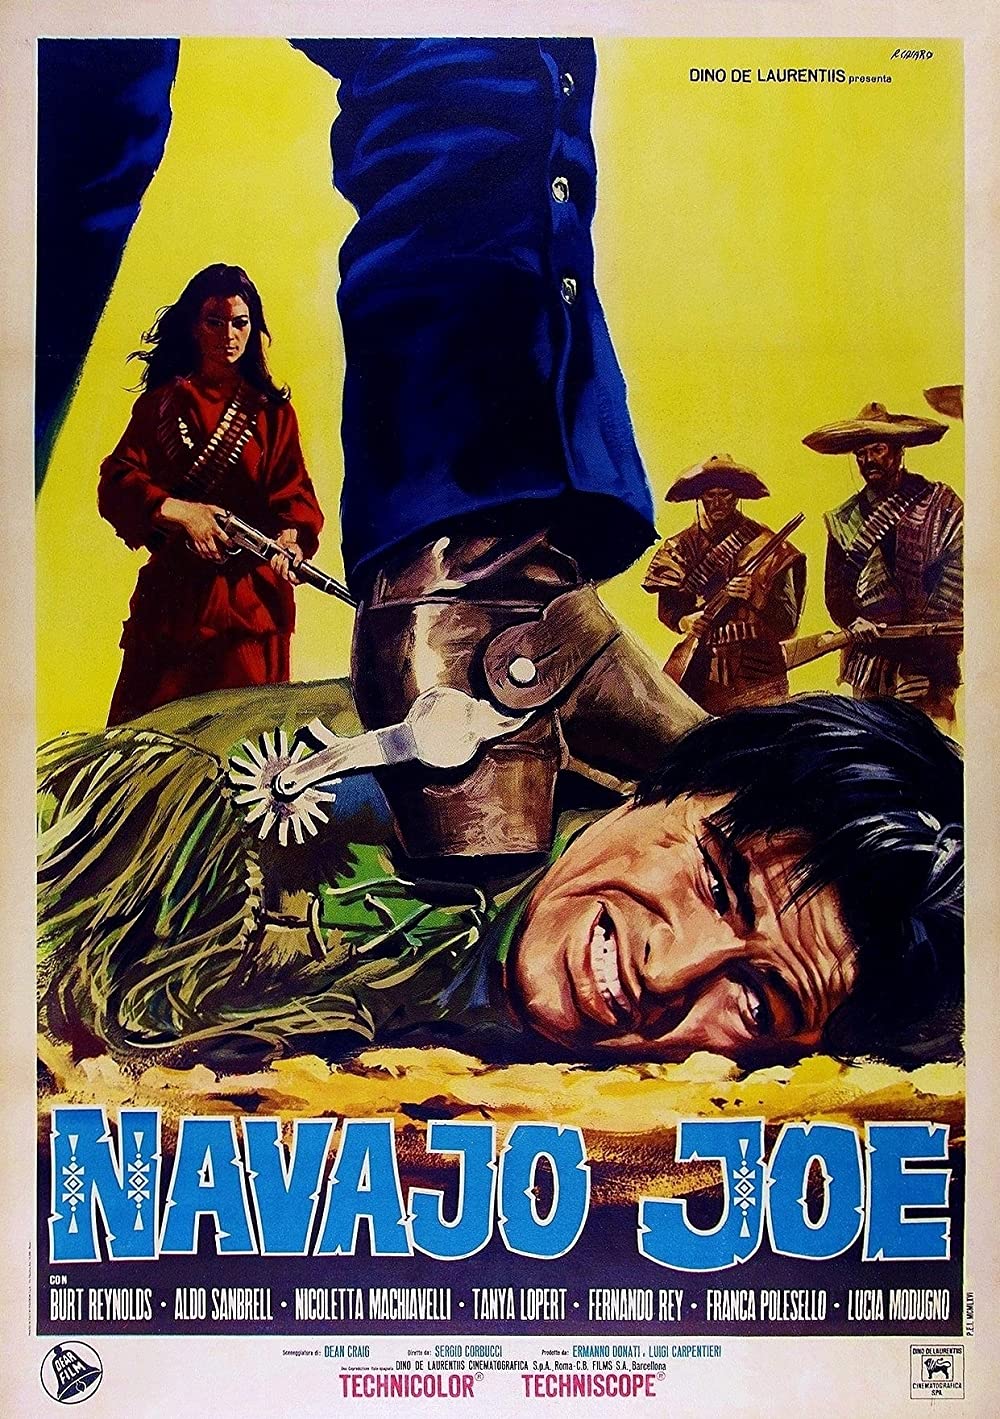 Filmbeschreibung zu Navajo Joe